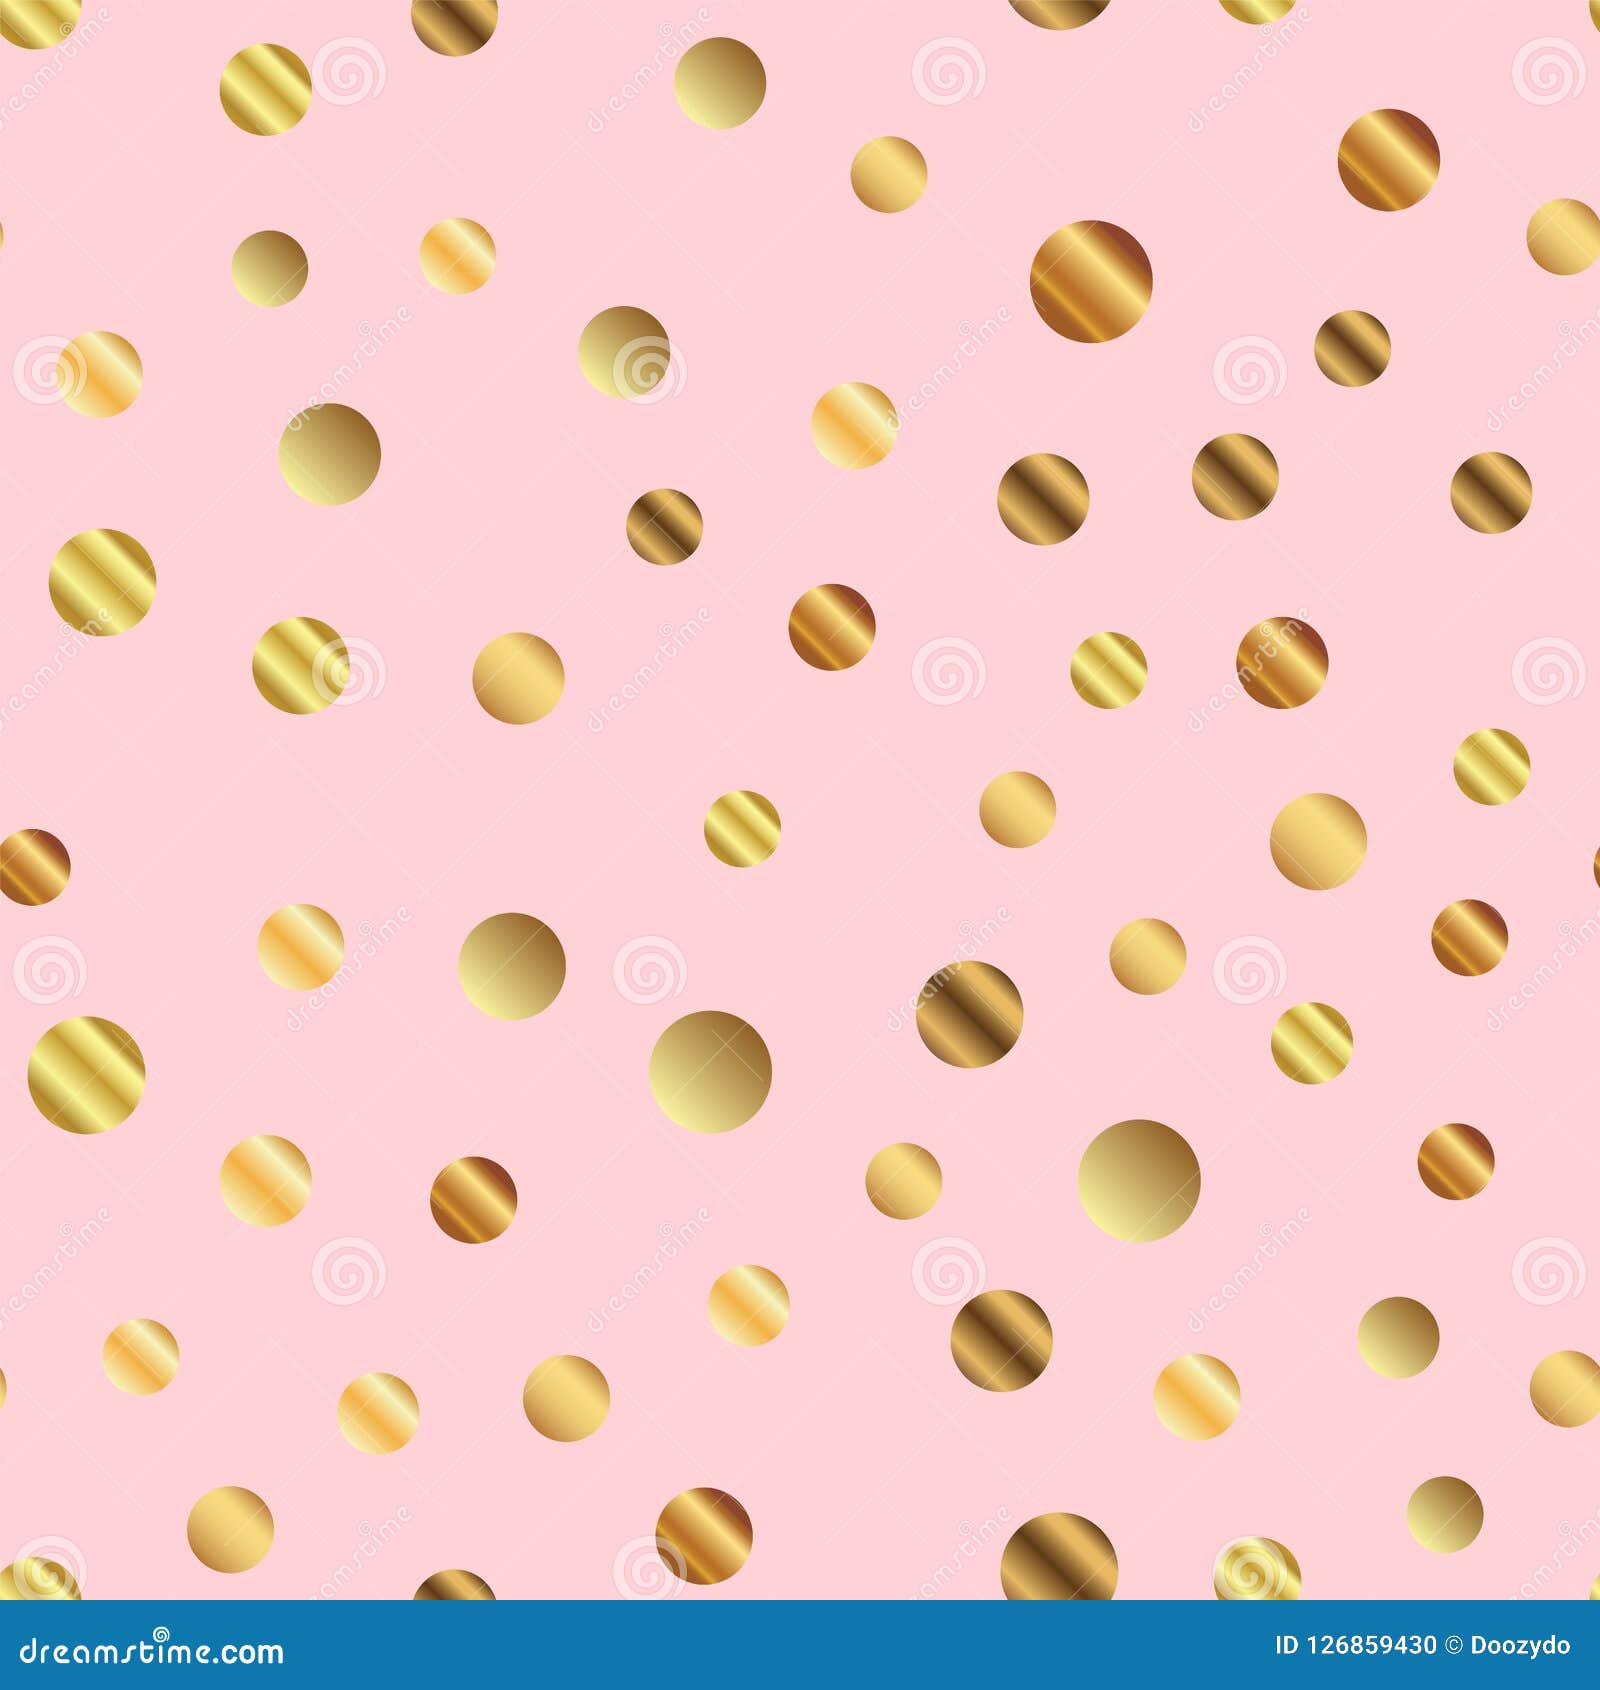 Golden Dots Seamless Pattern on Pink Background. Stock Illustration ...